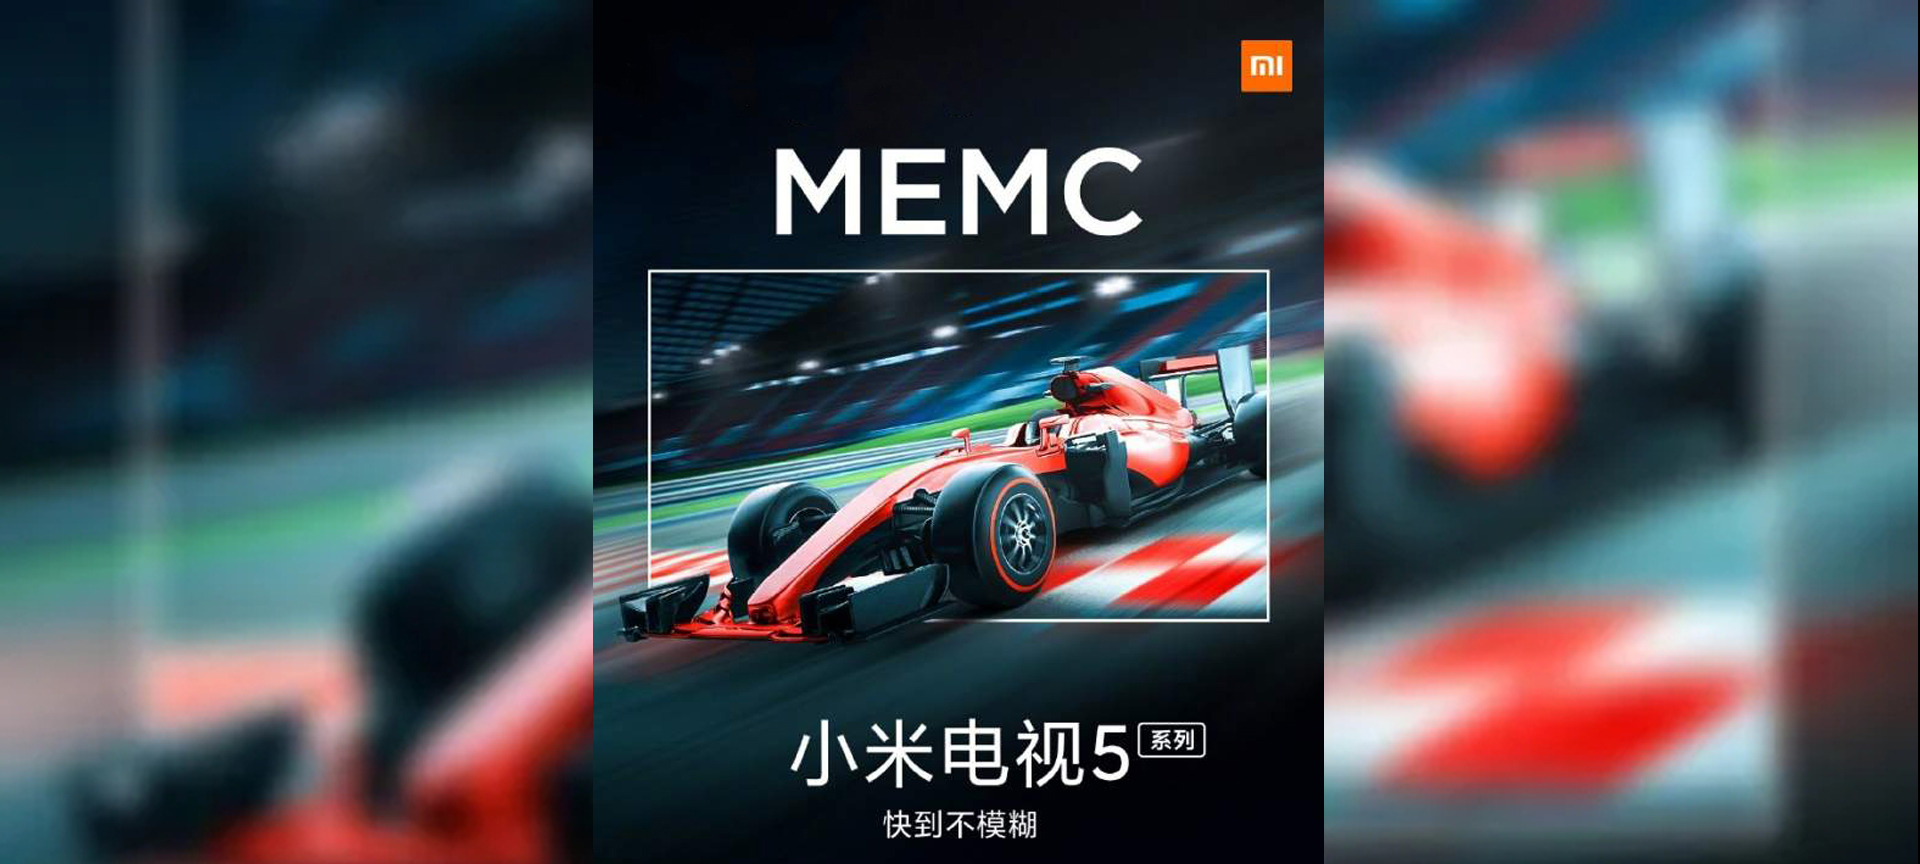 Mi TV 5 MEMC technológia